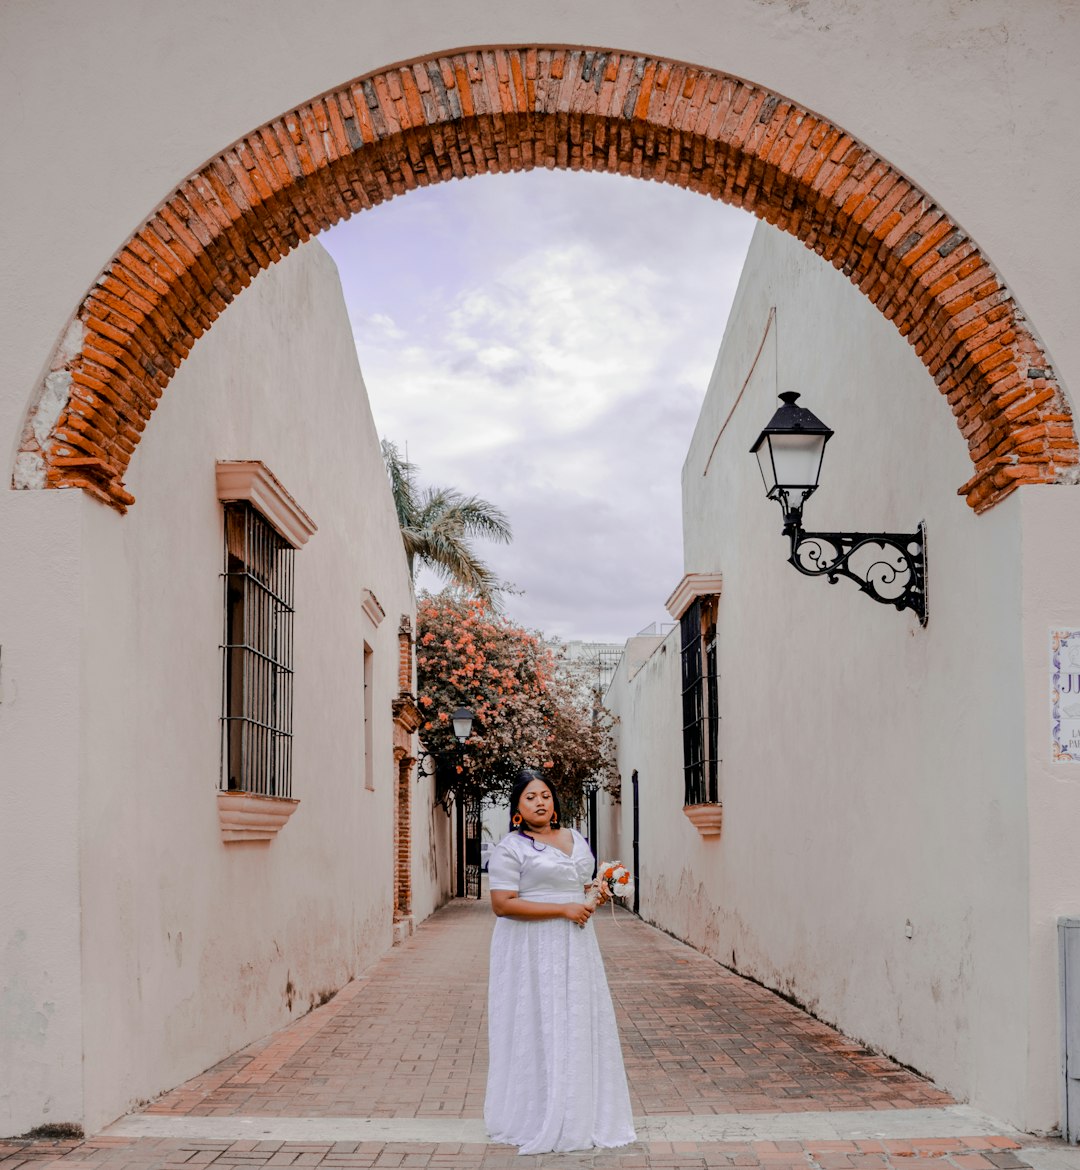 woman in white wedding dress walking on hallway